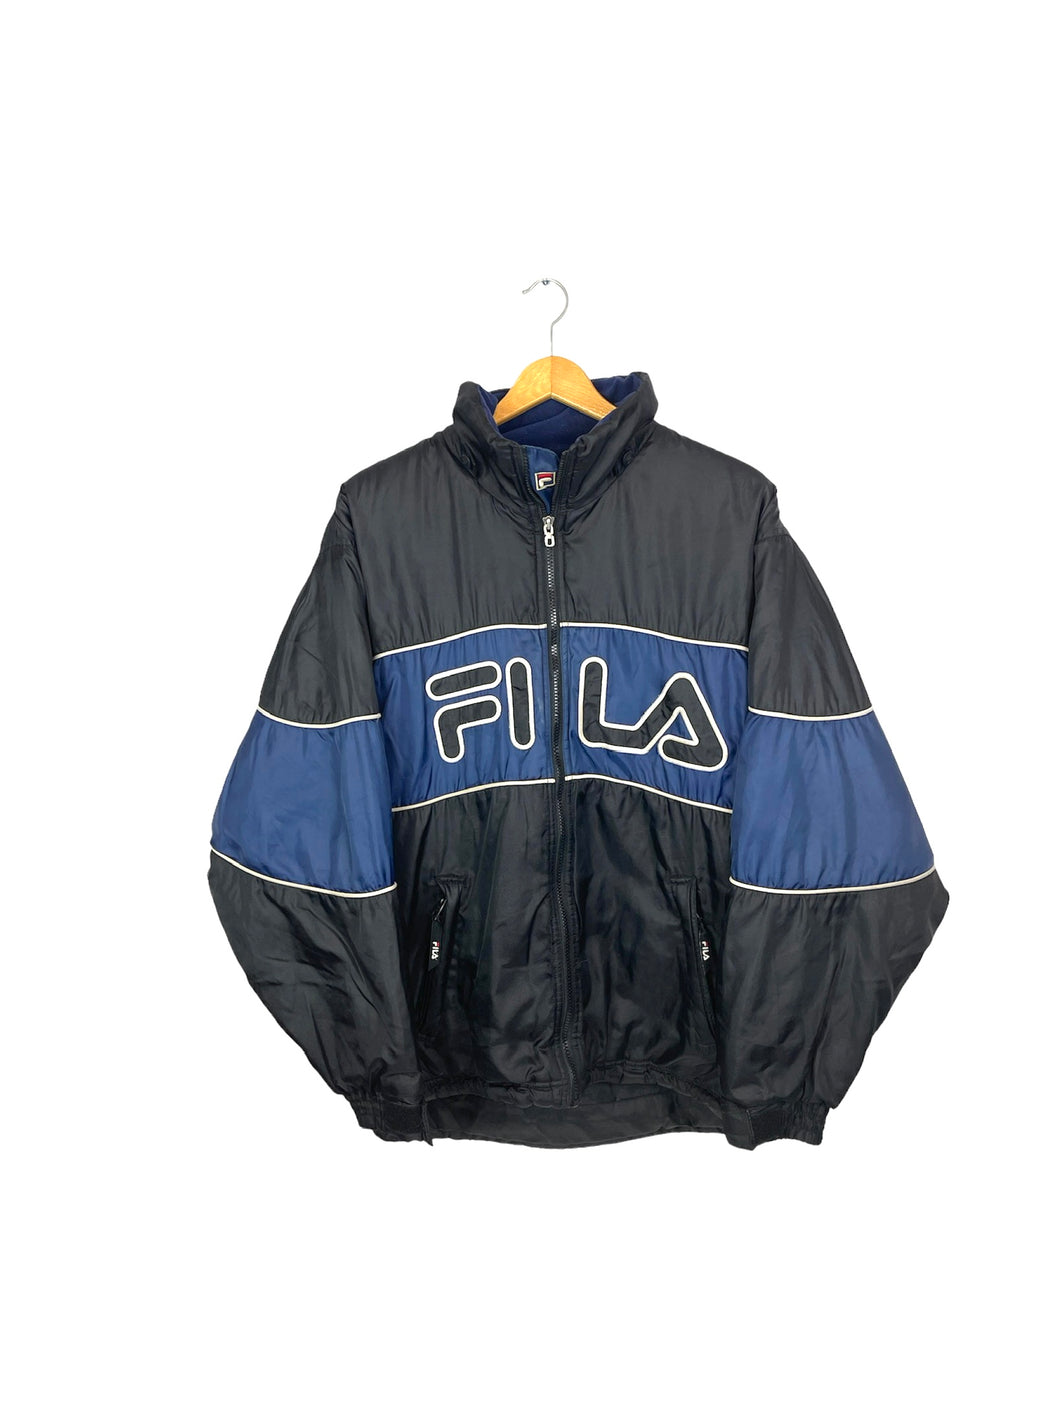 Fila Coat - Large